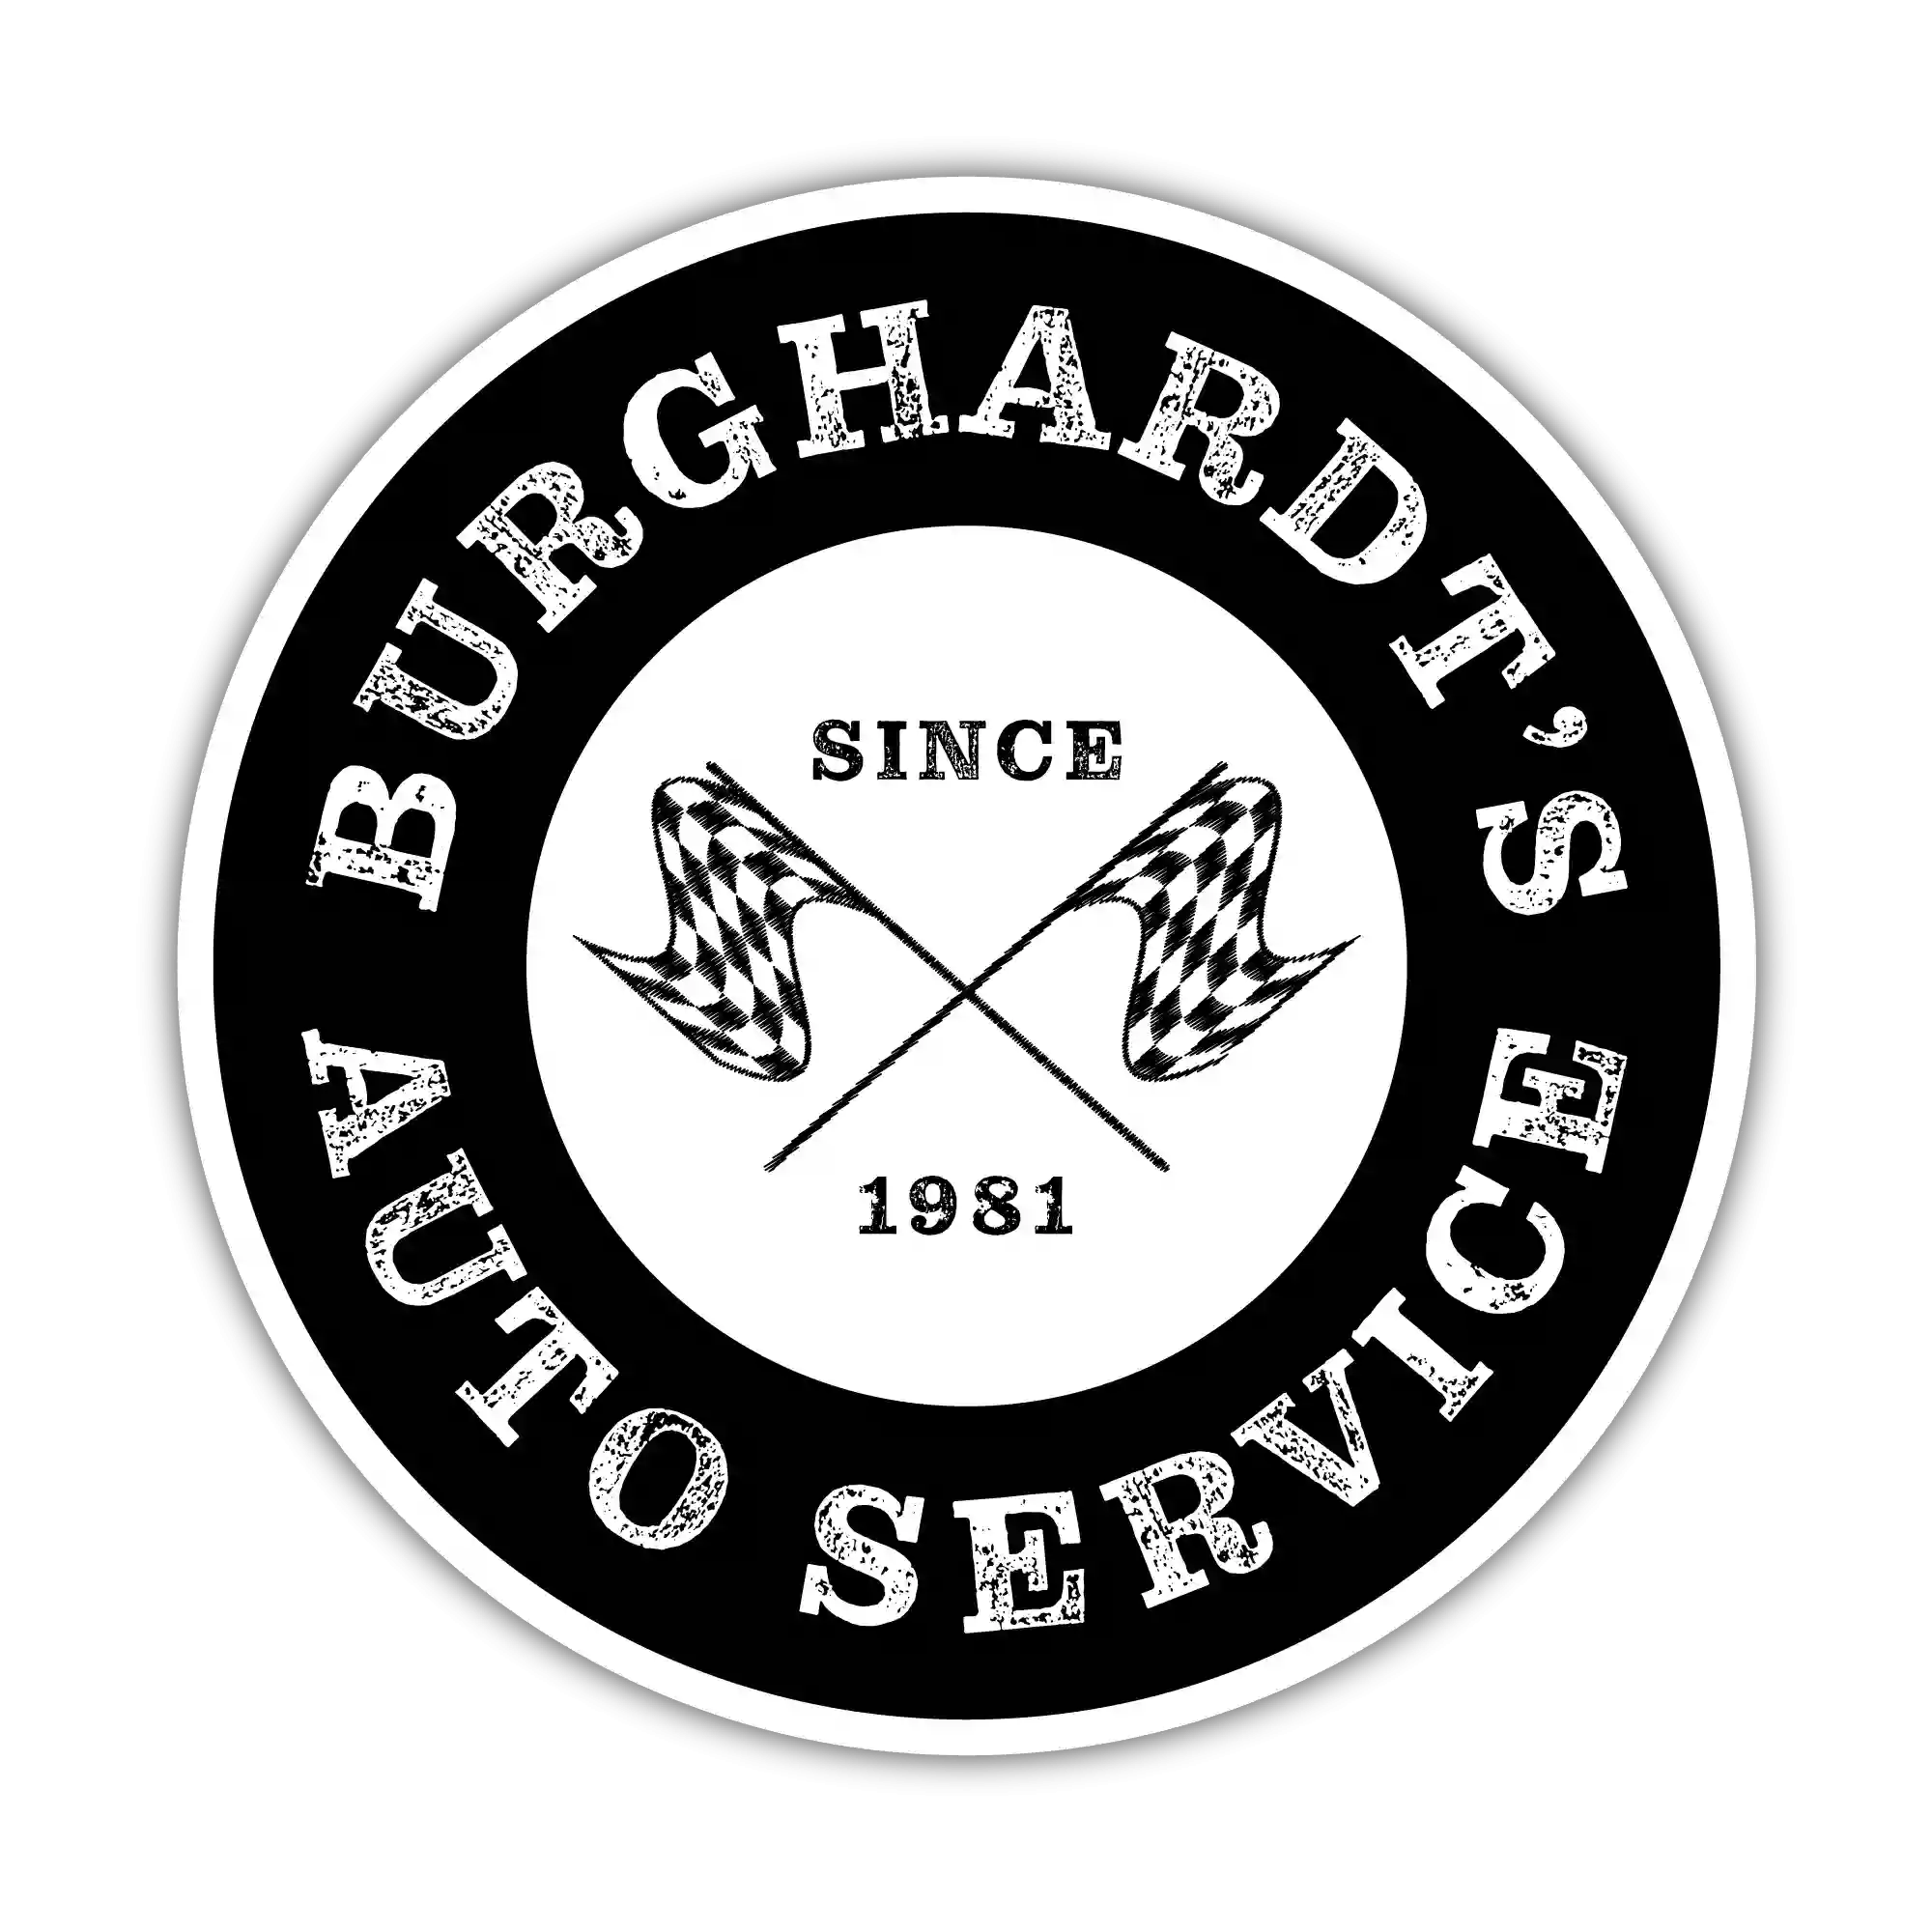 Burghardt's Auto Services